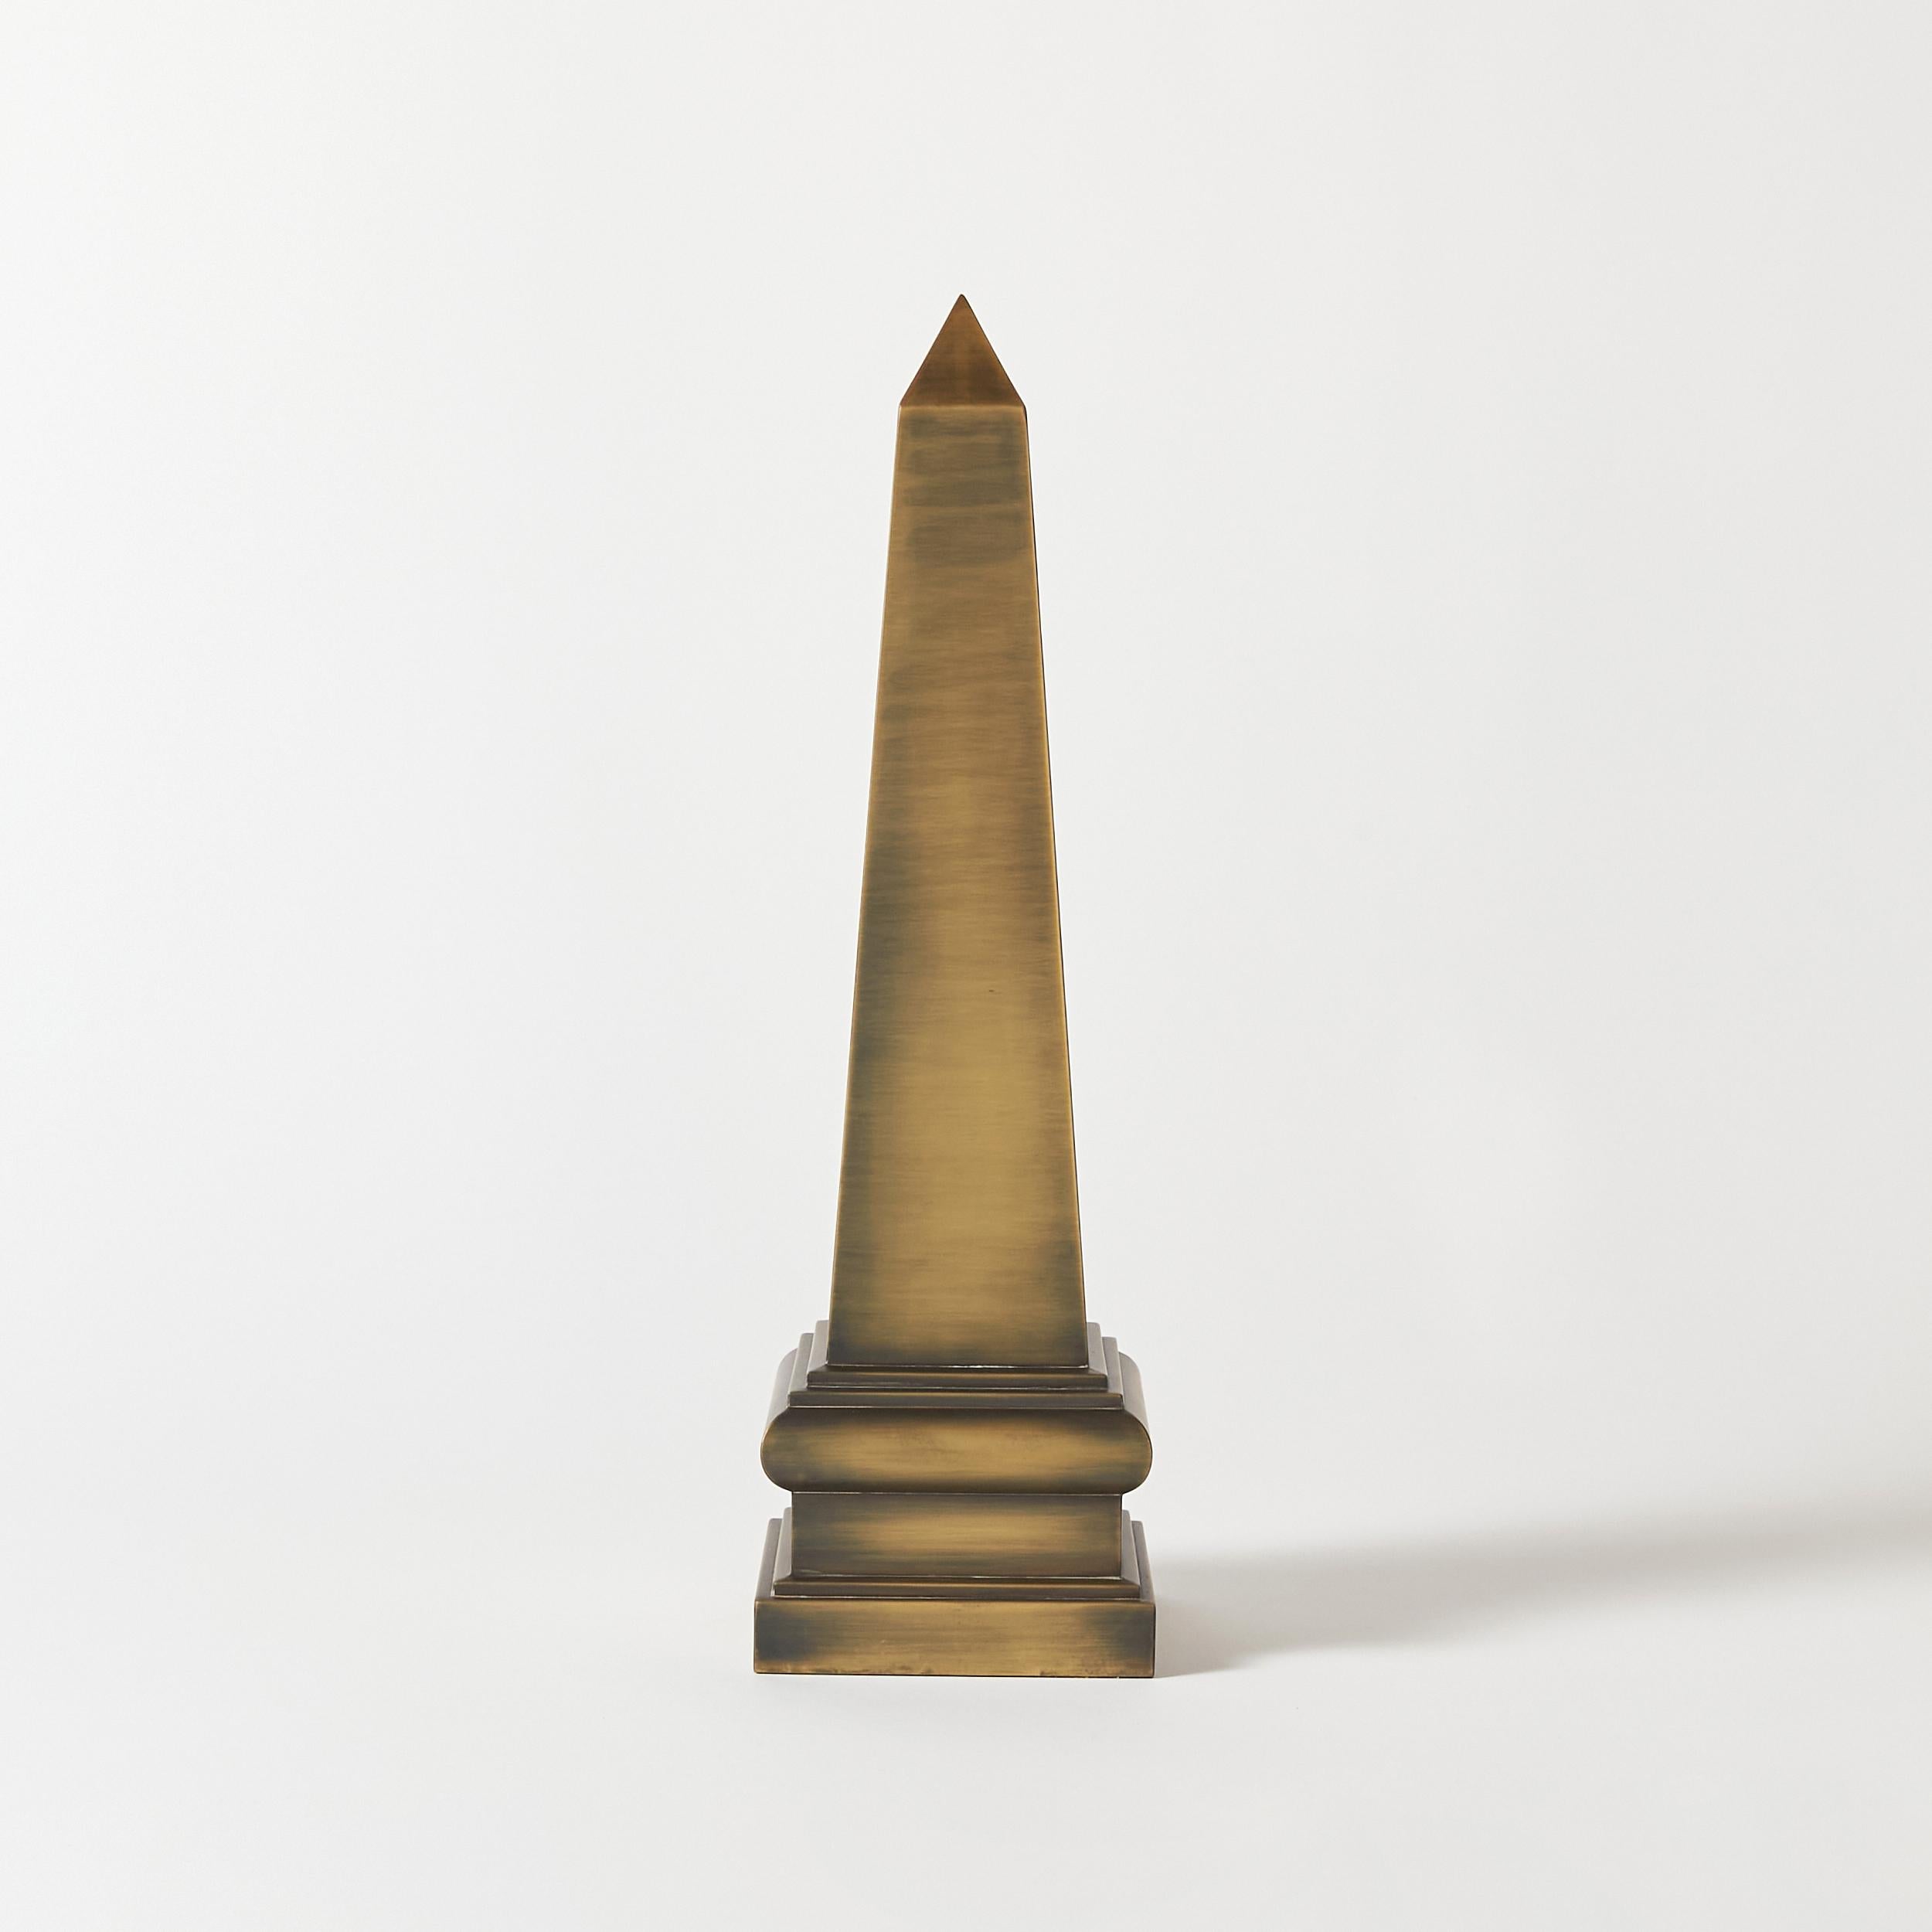 Brass obelisk refinished in antique bronze. Originally a display item from Gimbels Department Store.